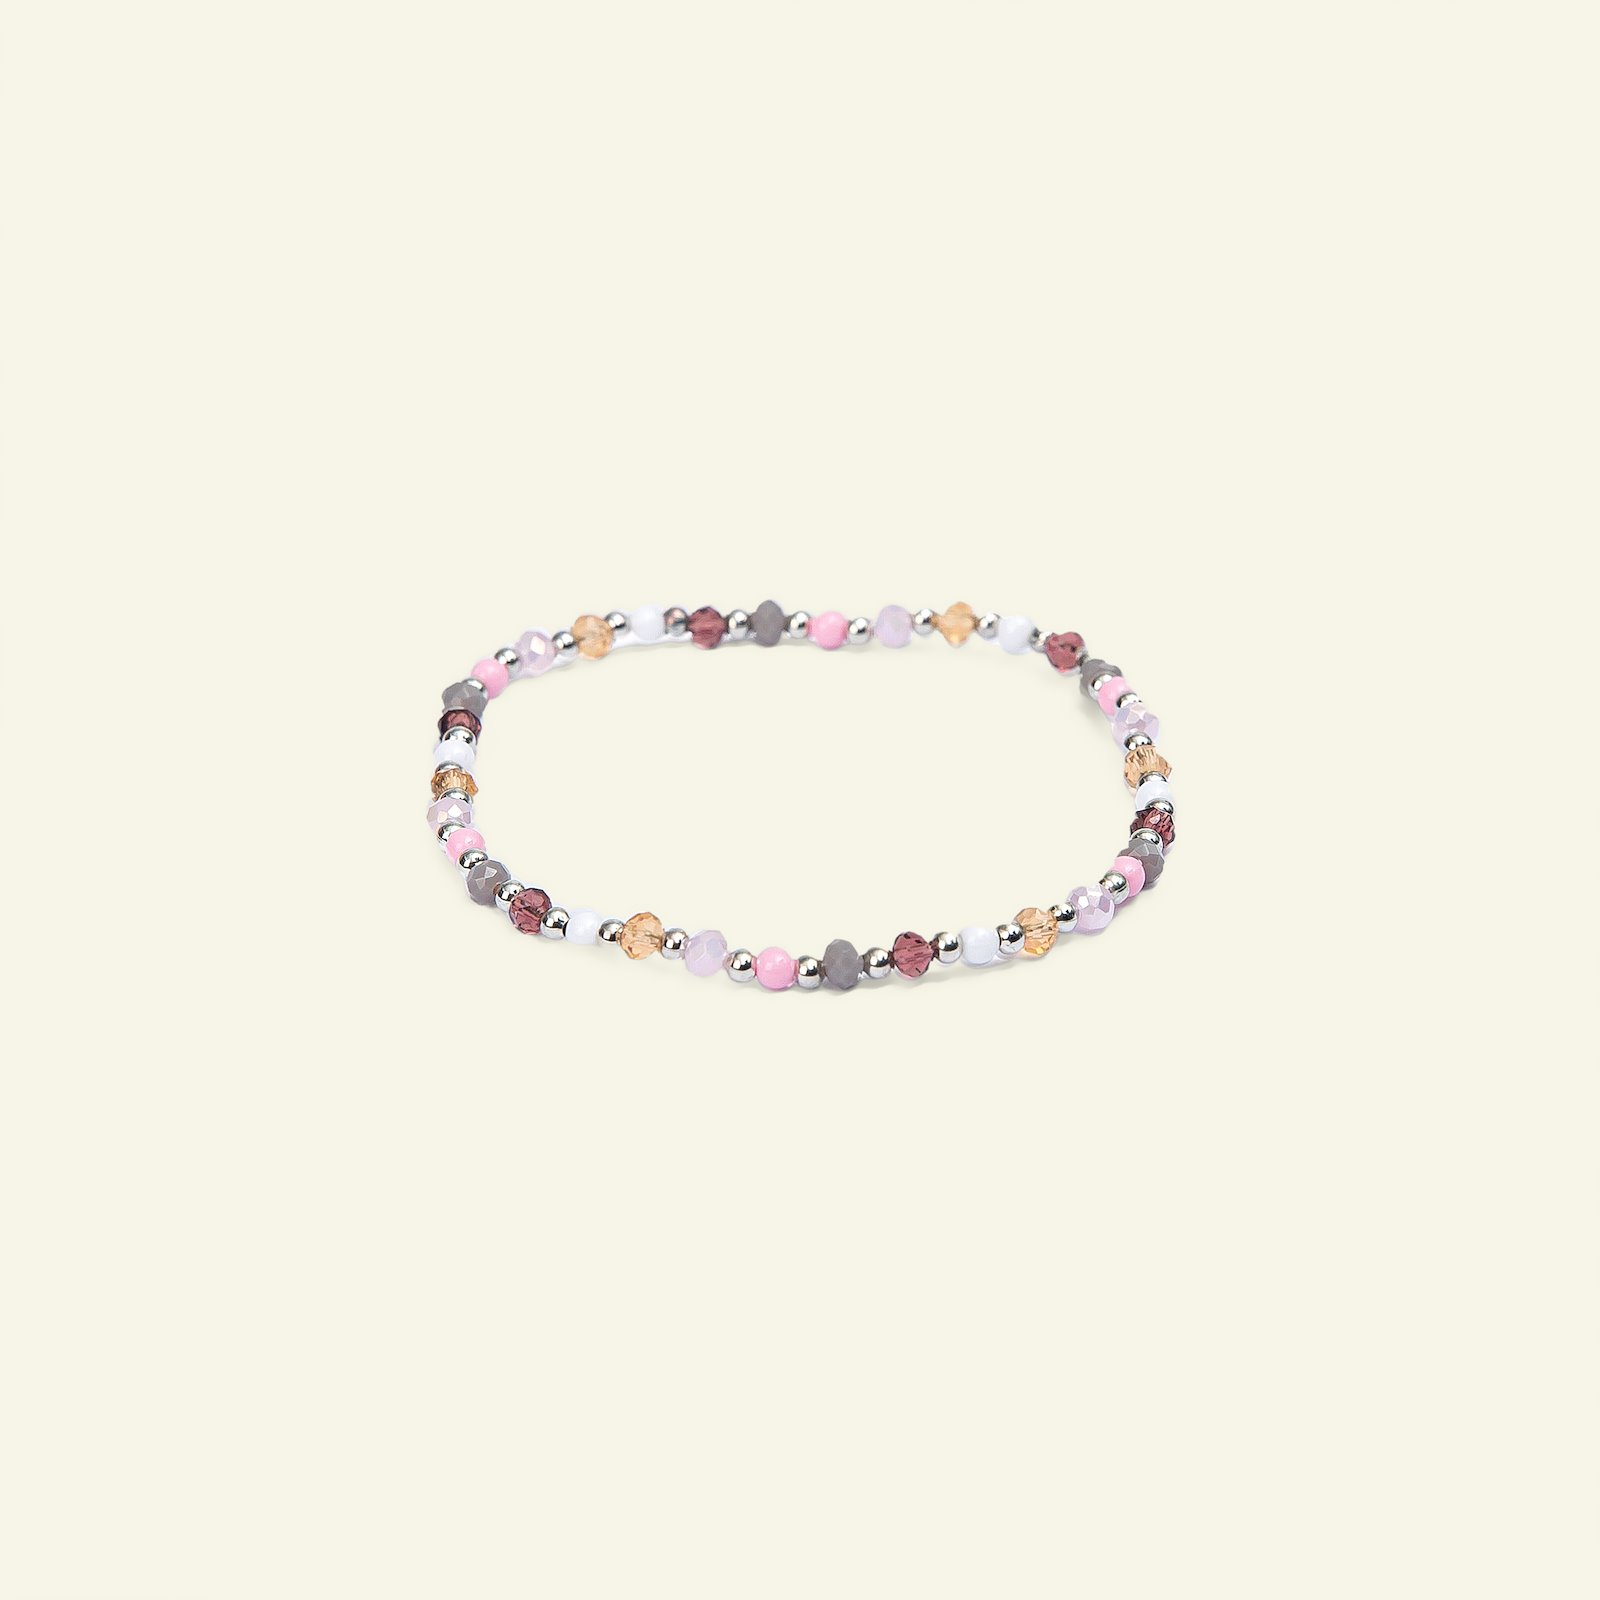 Kit bracelet beads rose/silver col mix 26906_pack_c